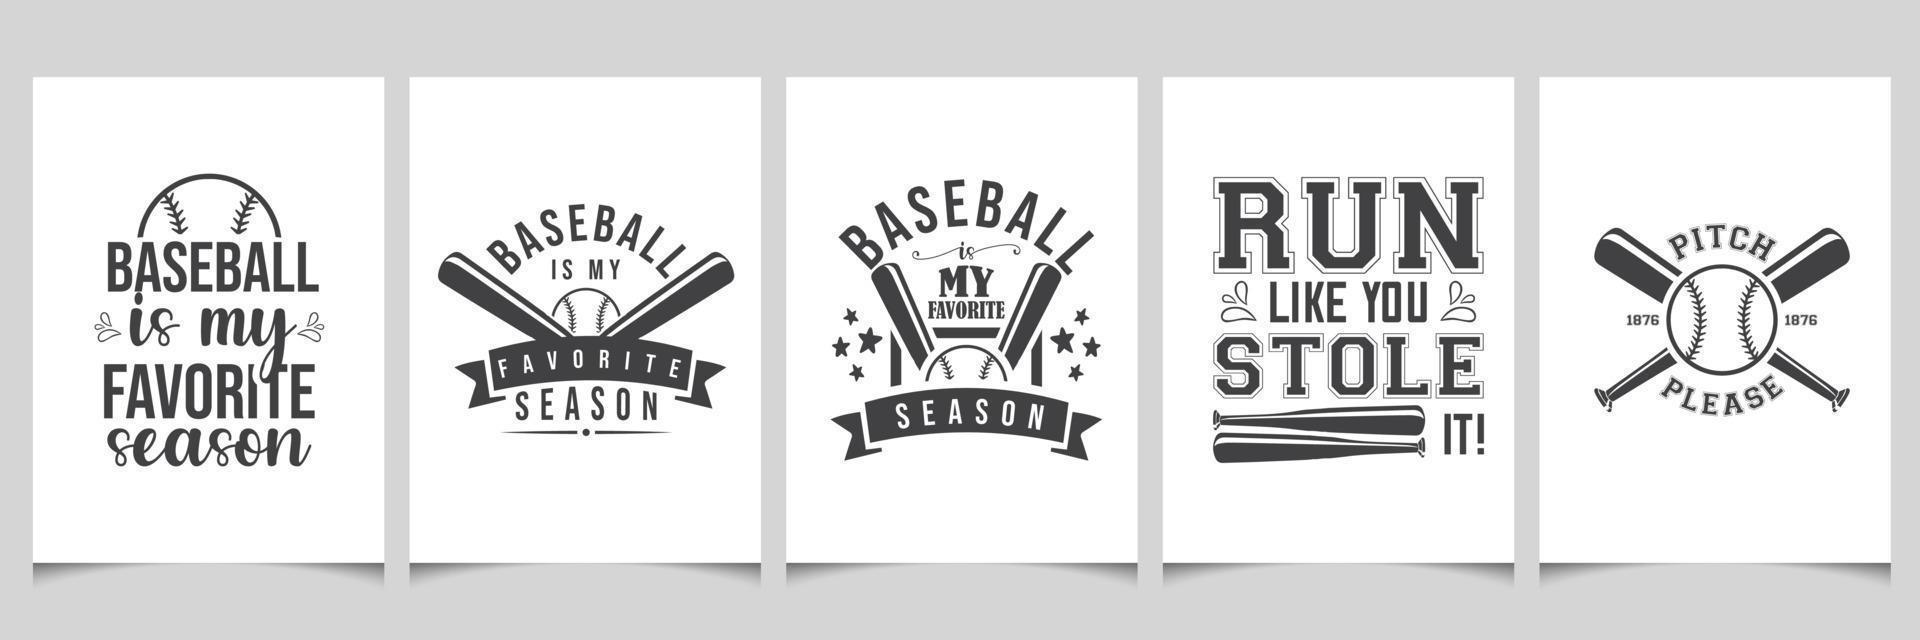 beisebol tipografia design-beisebol camiseta design-beisebol SVG agrupar - beisebol citar agrupar vetor